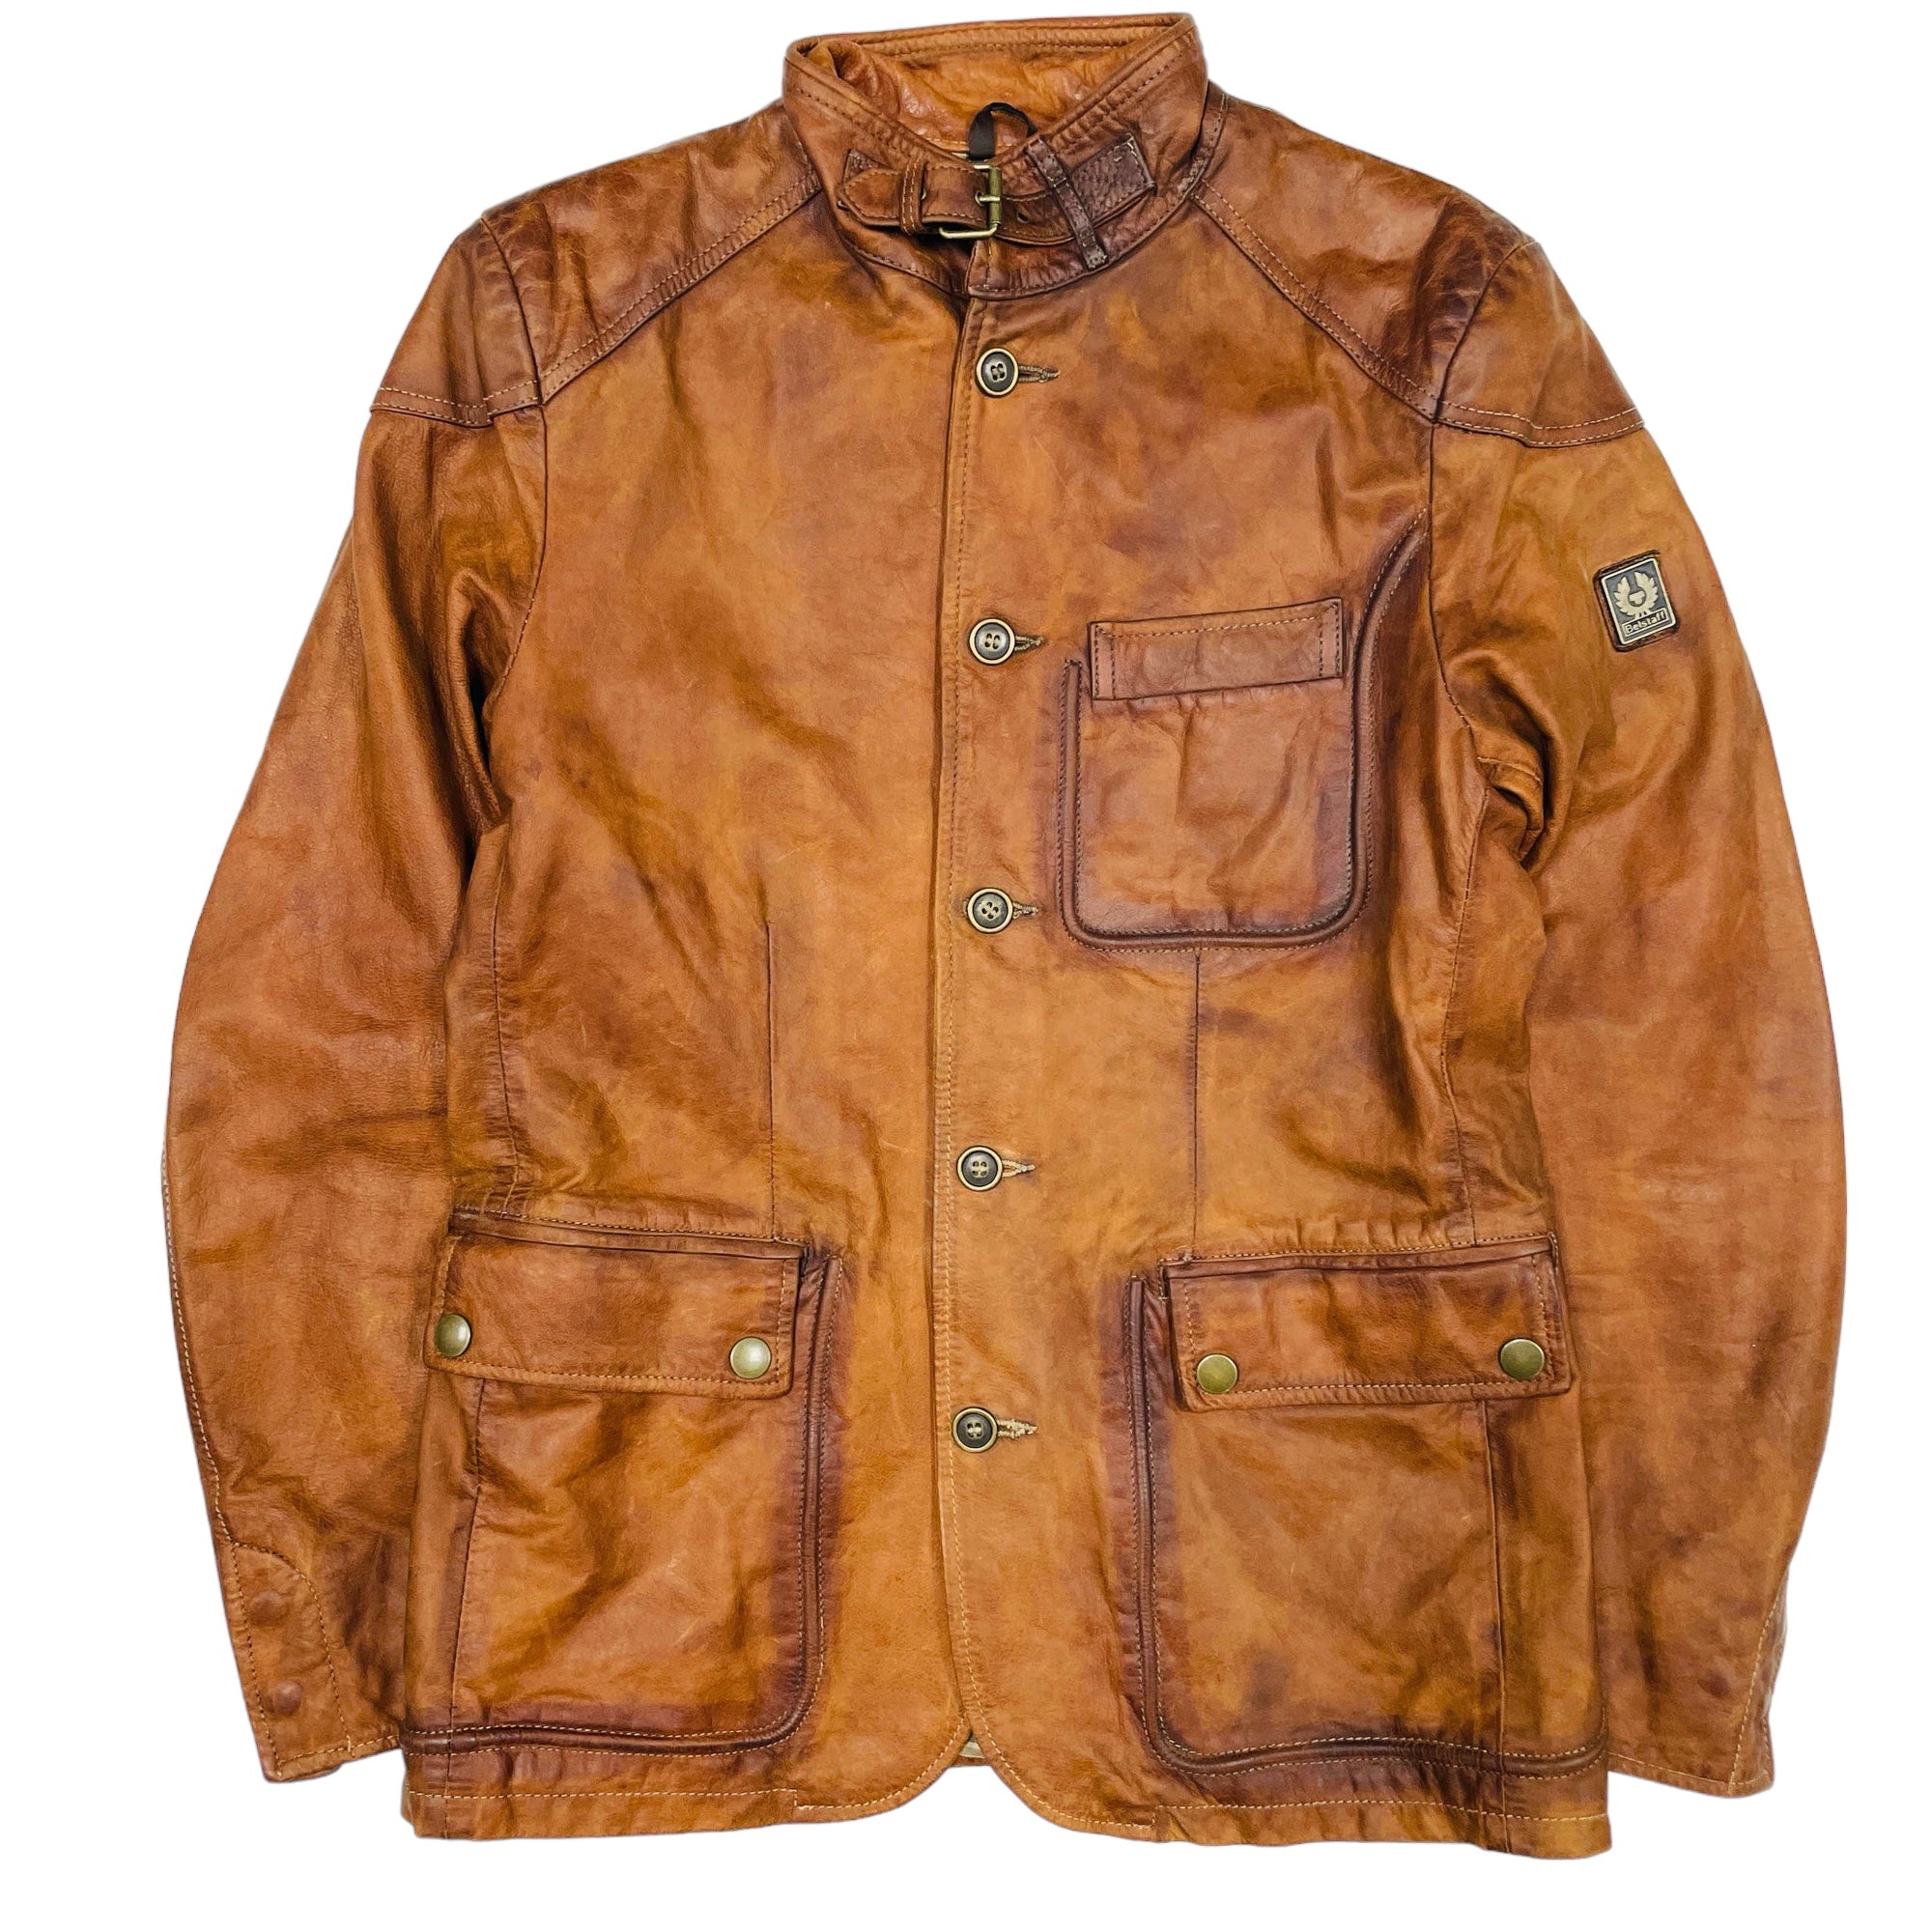 Belstaff Leather Jacket - Medium